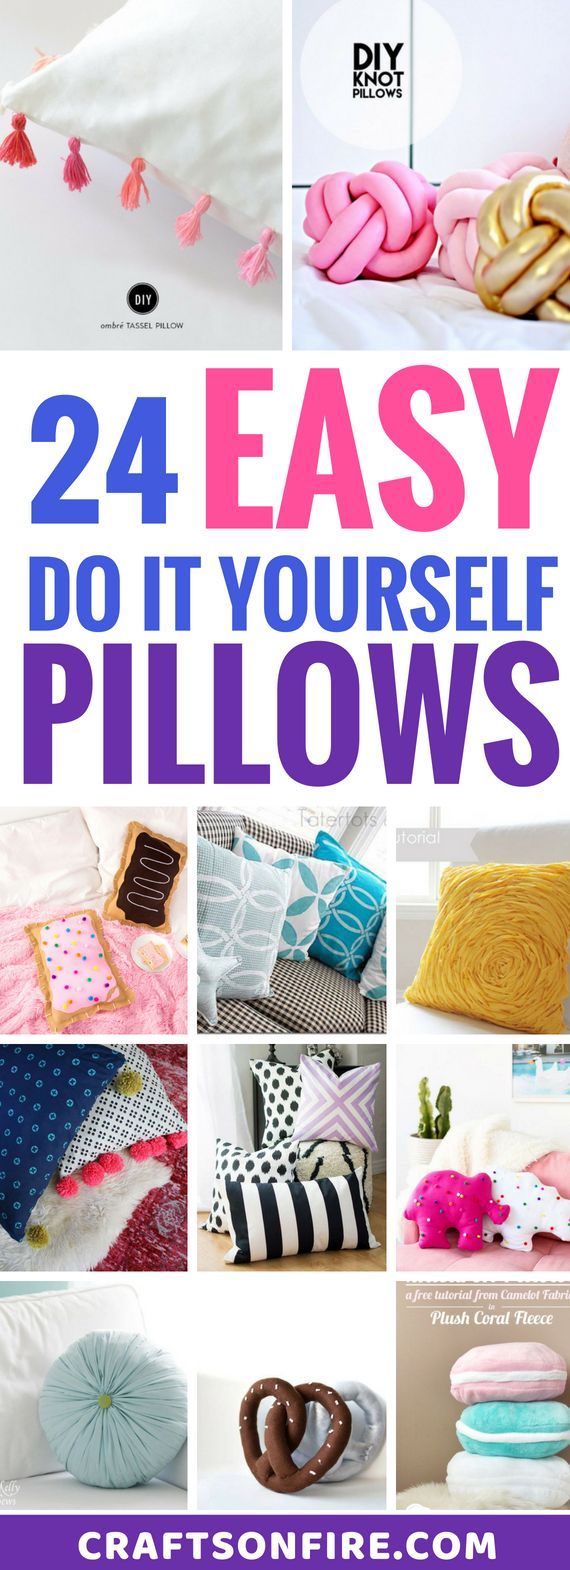 24 Best DIY Pillows That'll Make Your Room Look Better - Craftsonfire -   18 diy Pillows for teens ideas